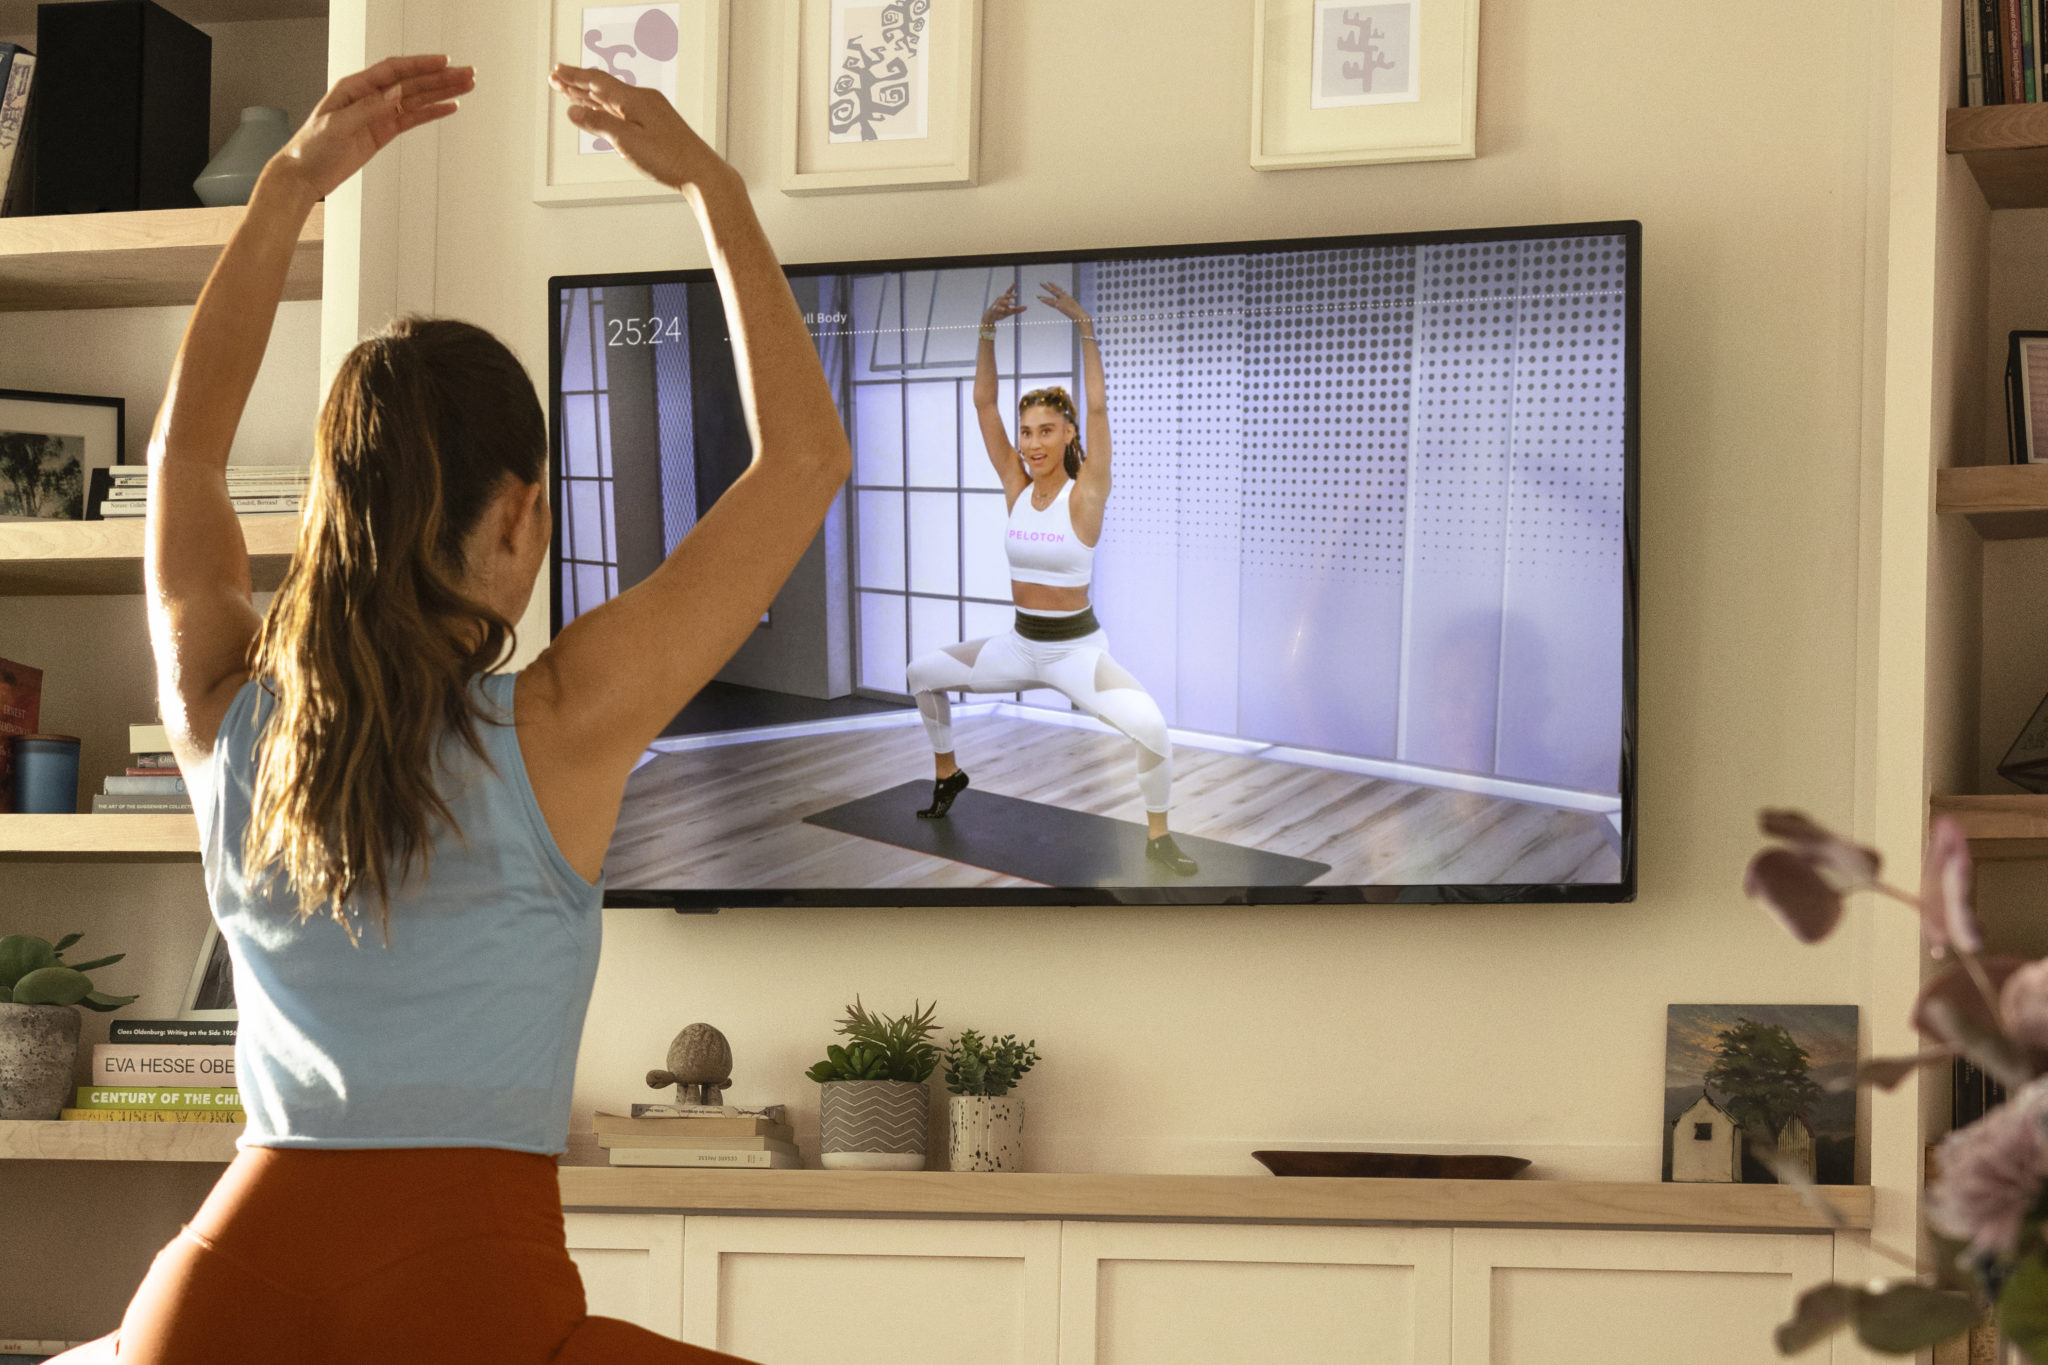 LG Launches Peleton App On LG Smart TVs